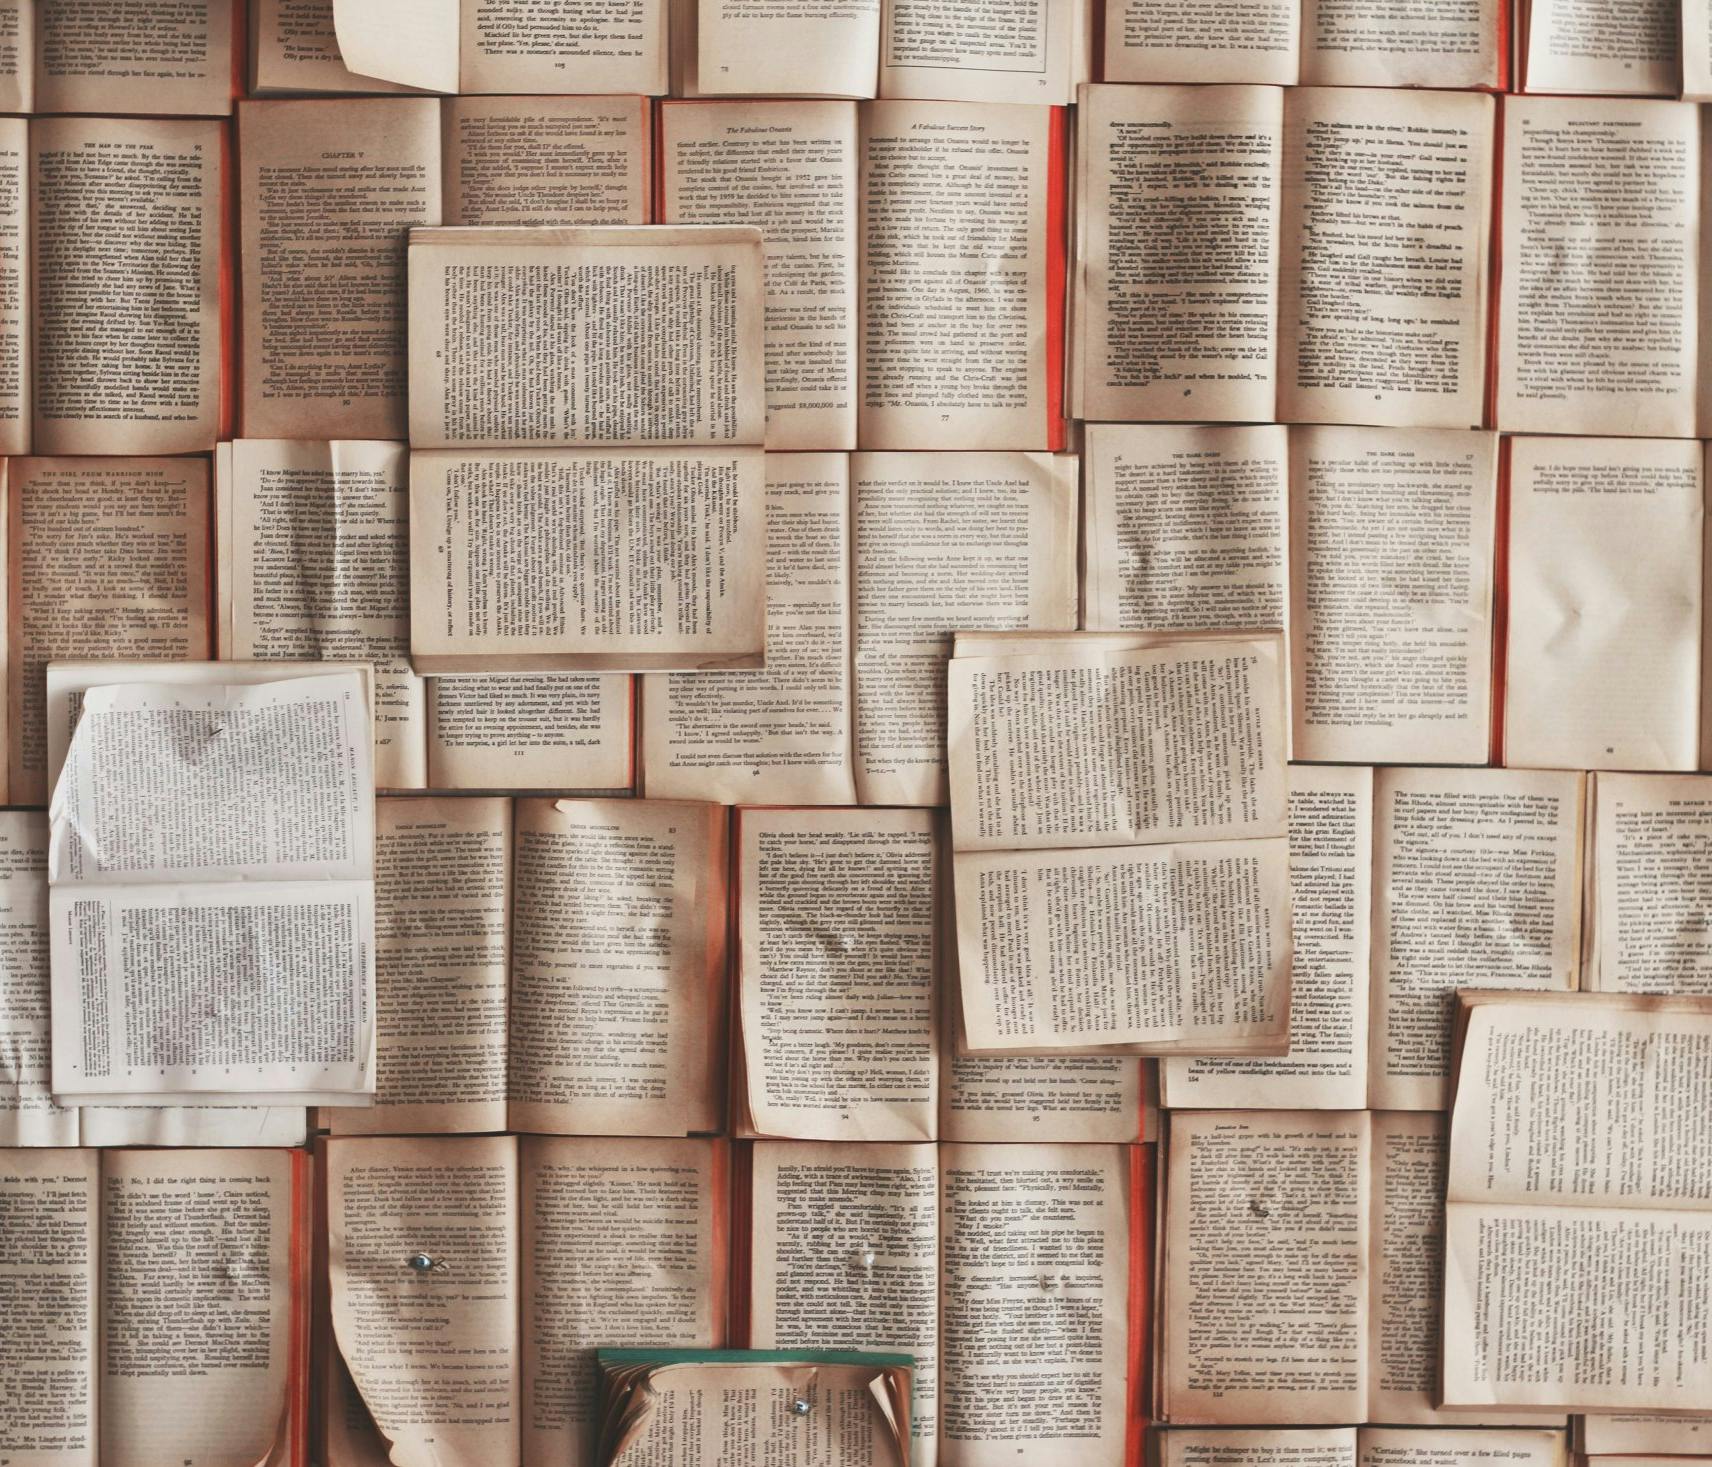 Foto di tanti libri aperti a formare una sorta di muro